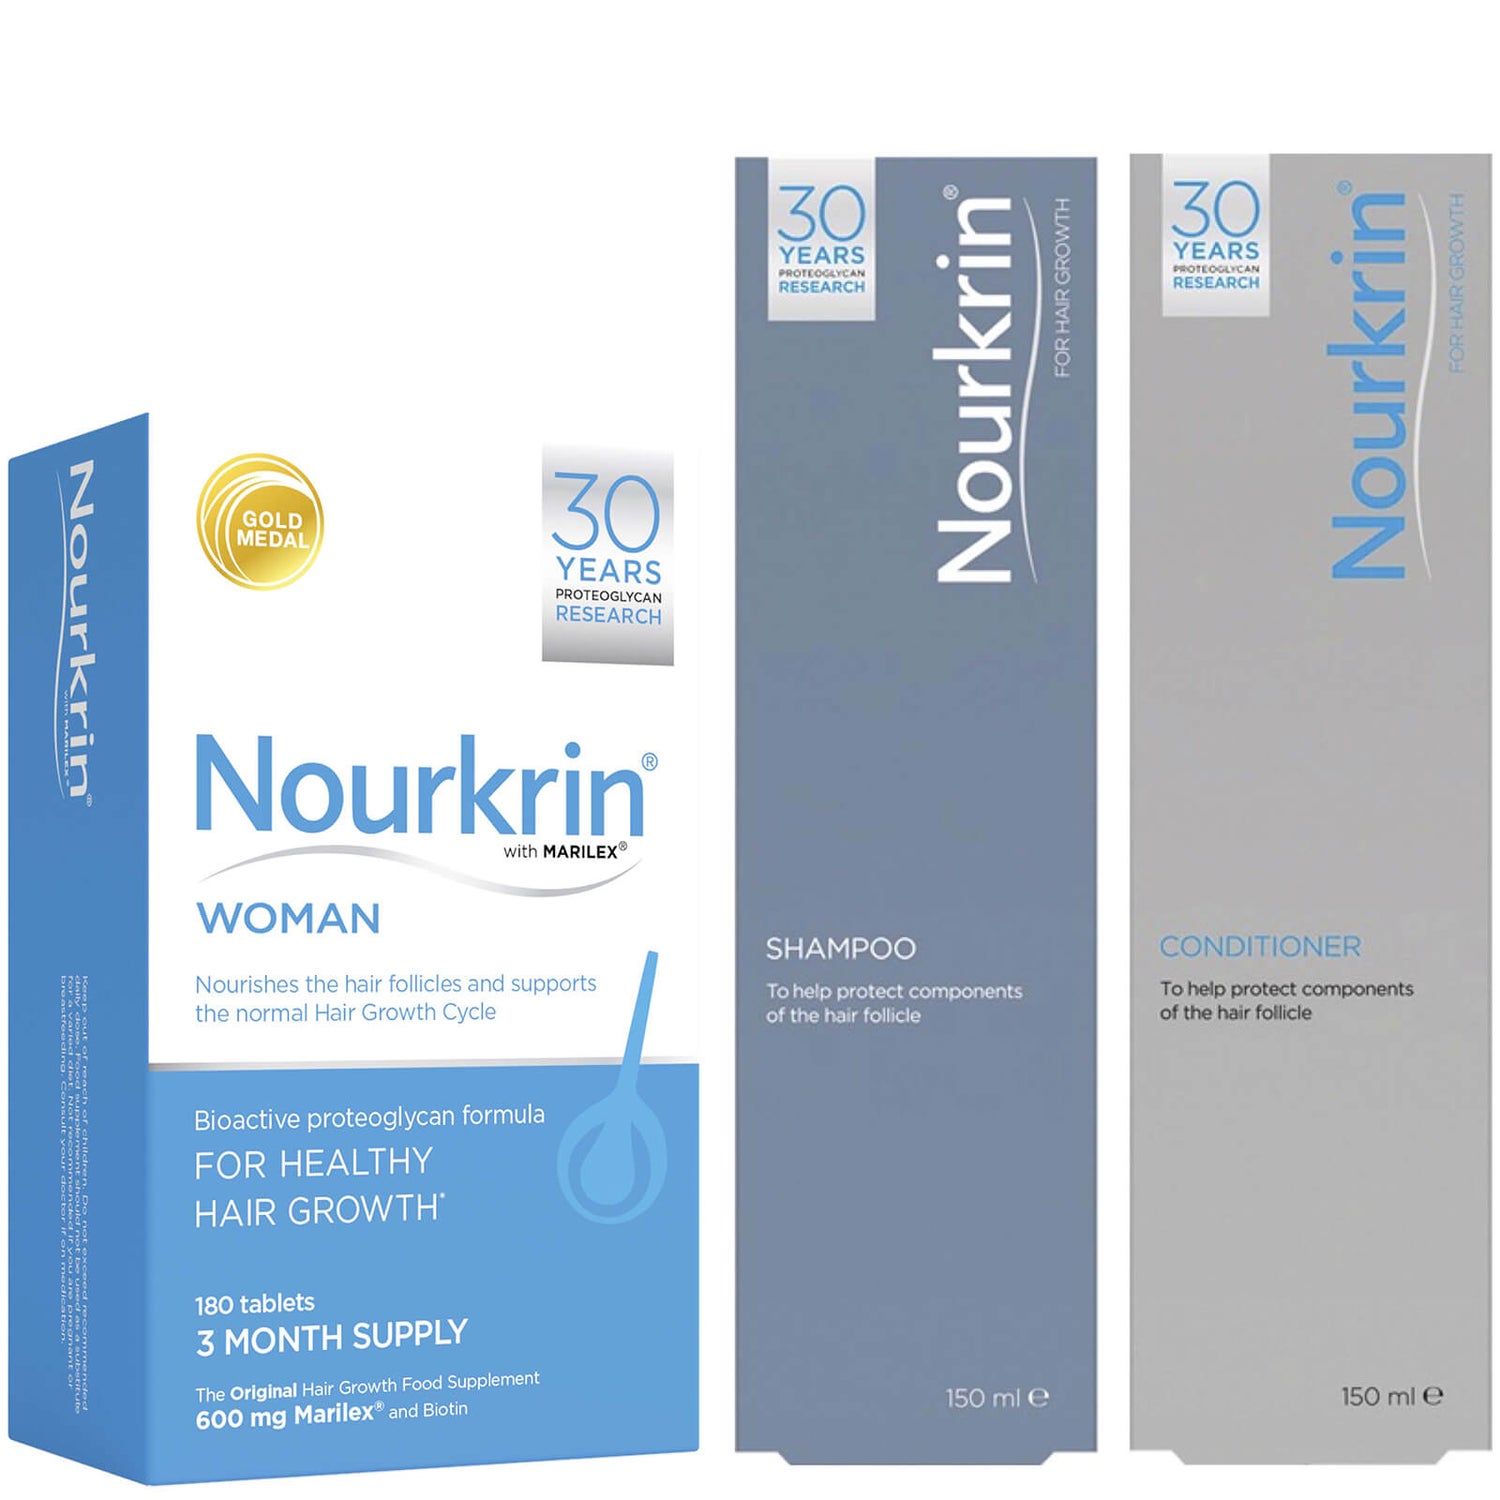 Nourkrin Woman バリューパック - 180錠 + シャンプー・コンディショナー付き (150mlx2)